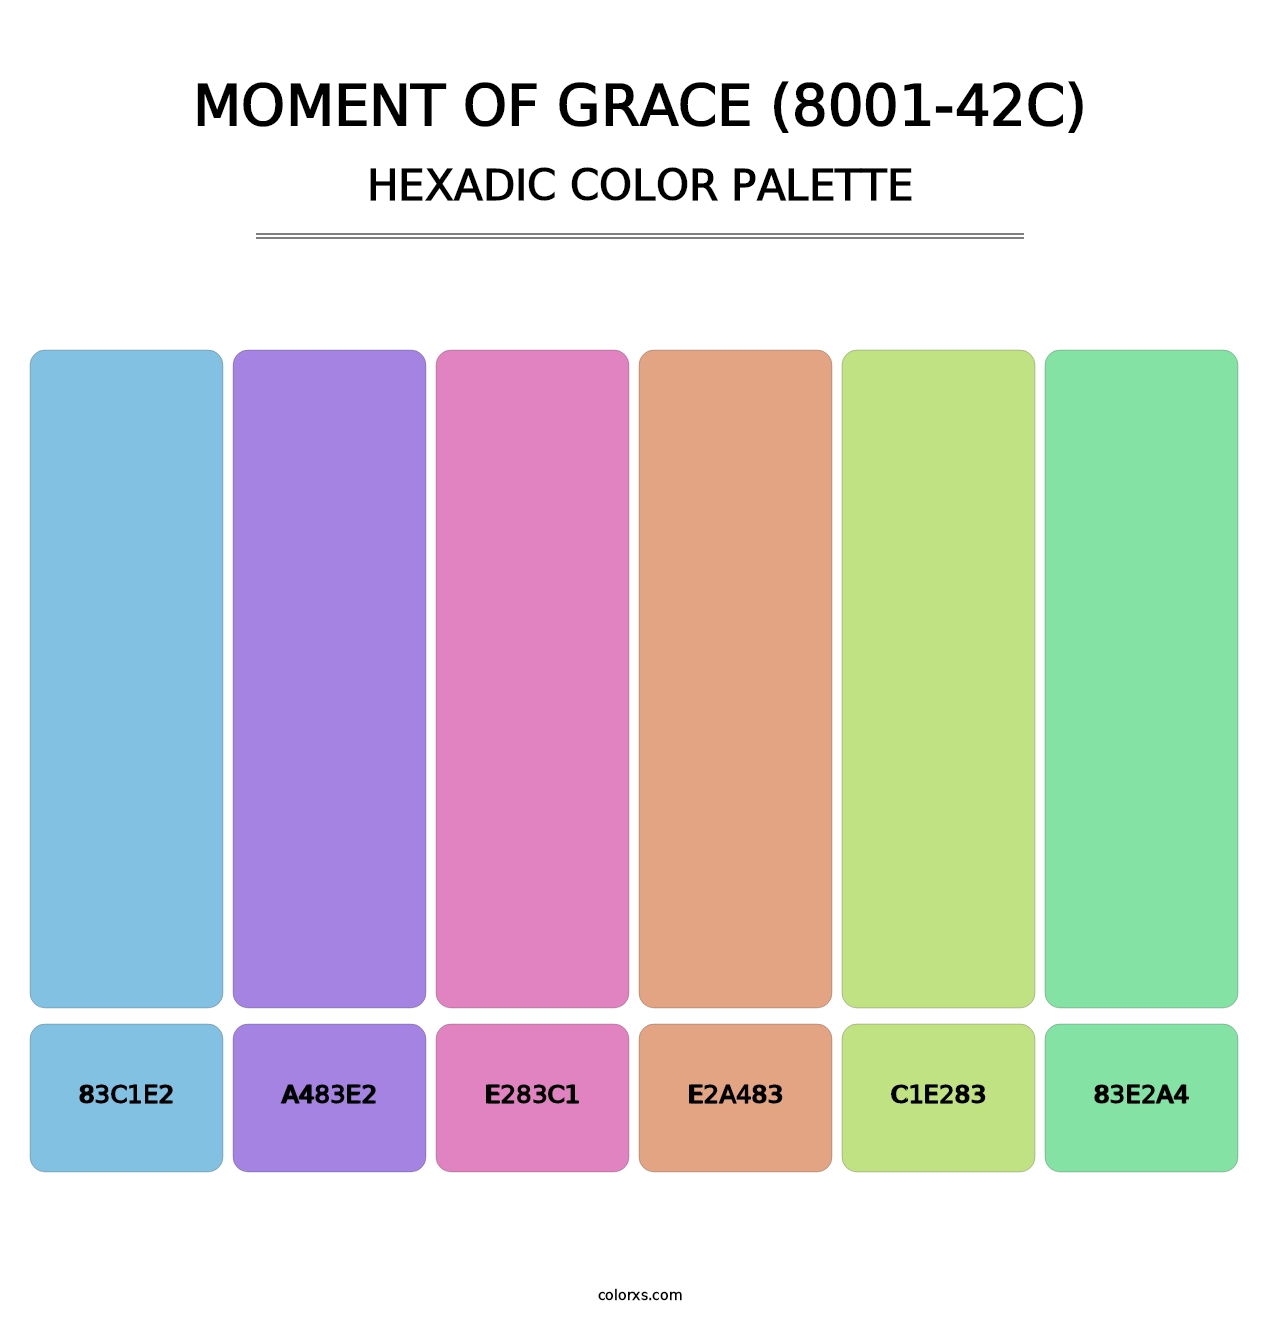 Moment of Grace (8001-42C) - Hexadic Color Palette